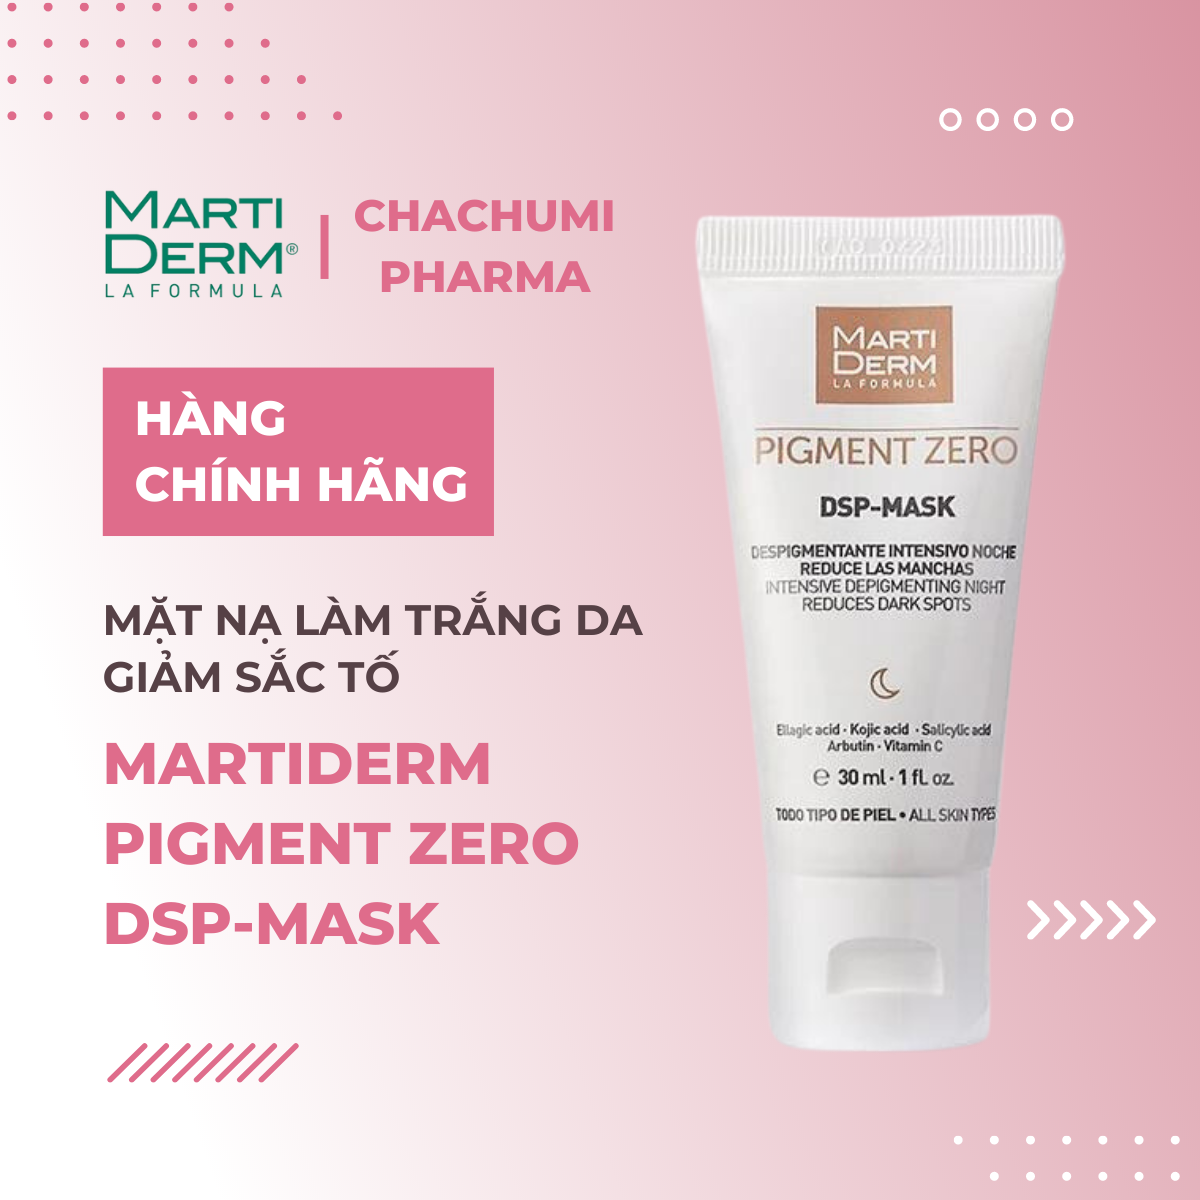 Martiderm Pigment Zero DSP Mask 30ml - Mặt Nạ Làm Trắng Da Giảm Sắc Tố